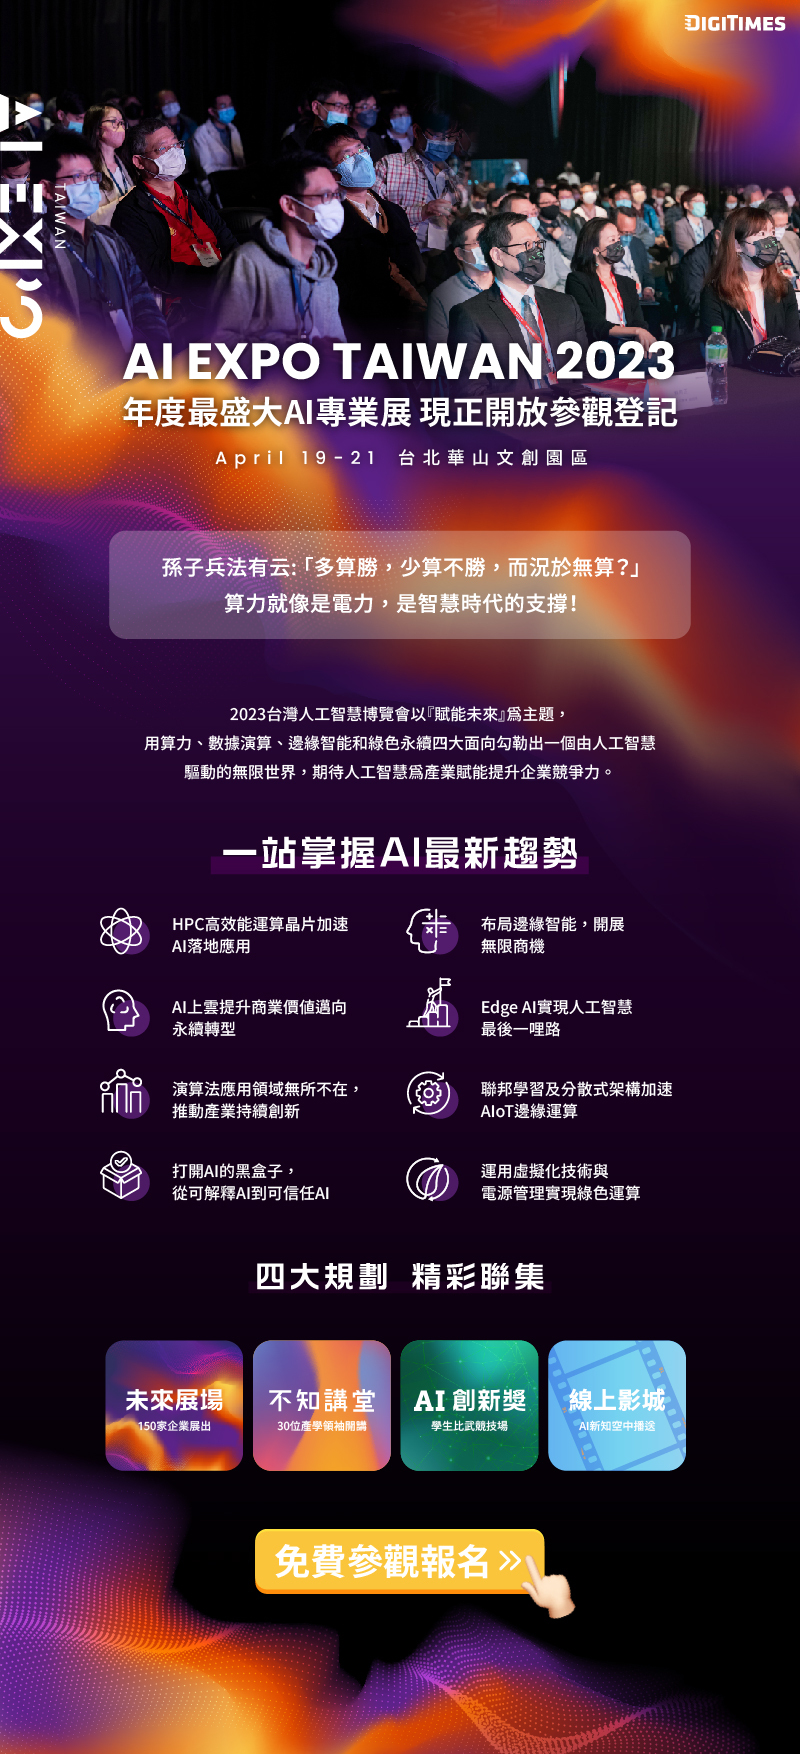 AIMS研究中心協辦 Digitimes AI EXPO Taiwan 台灣AI博覽會 2023/4/19 ( 三 )～2023/4/21 ( 五 ) 台北華山文創園區